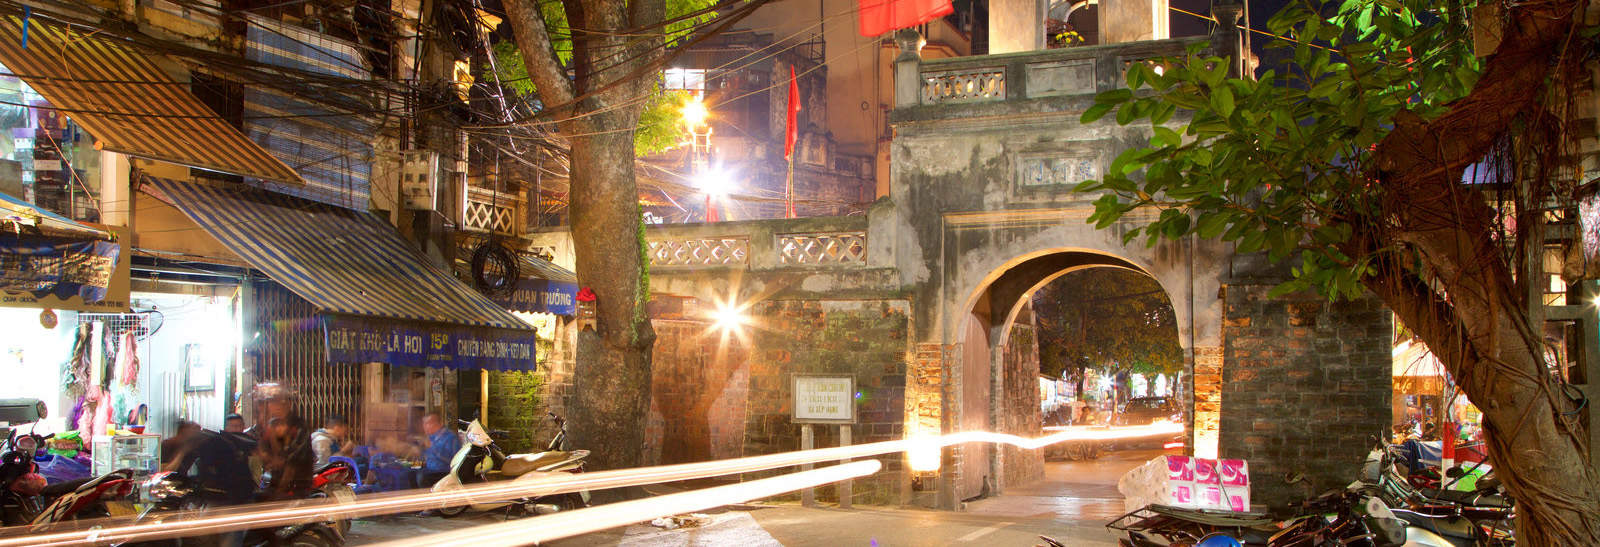 Old East Gate (Ô Quan Chưởng), Hanoi: The Last Remaining Gate of Thang Long